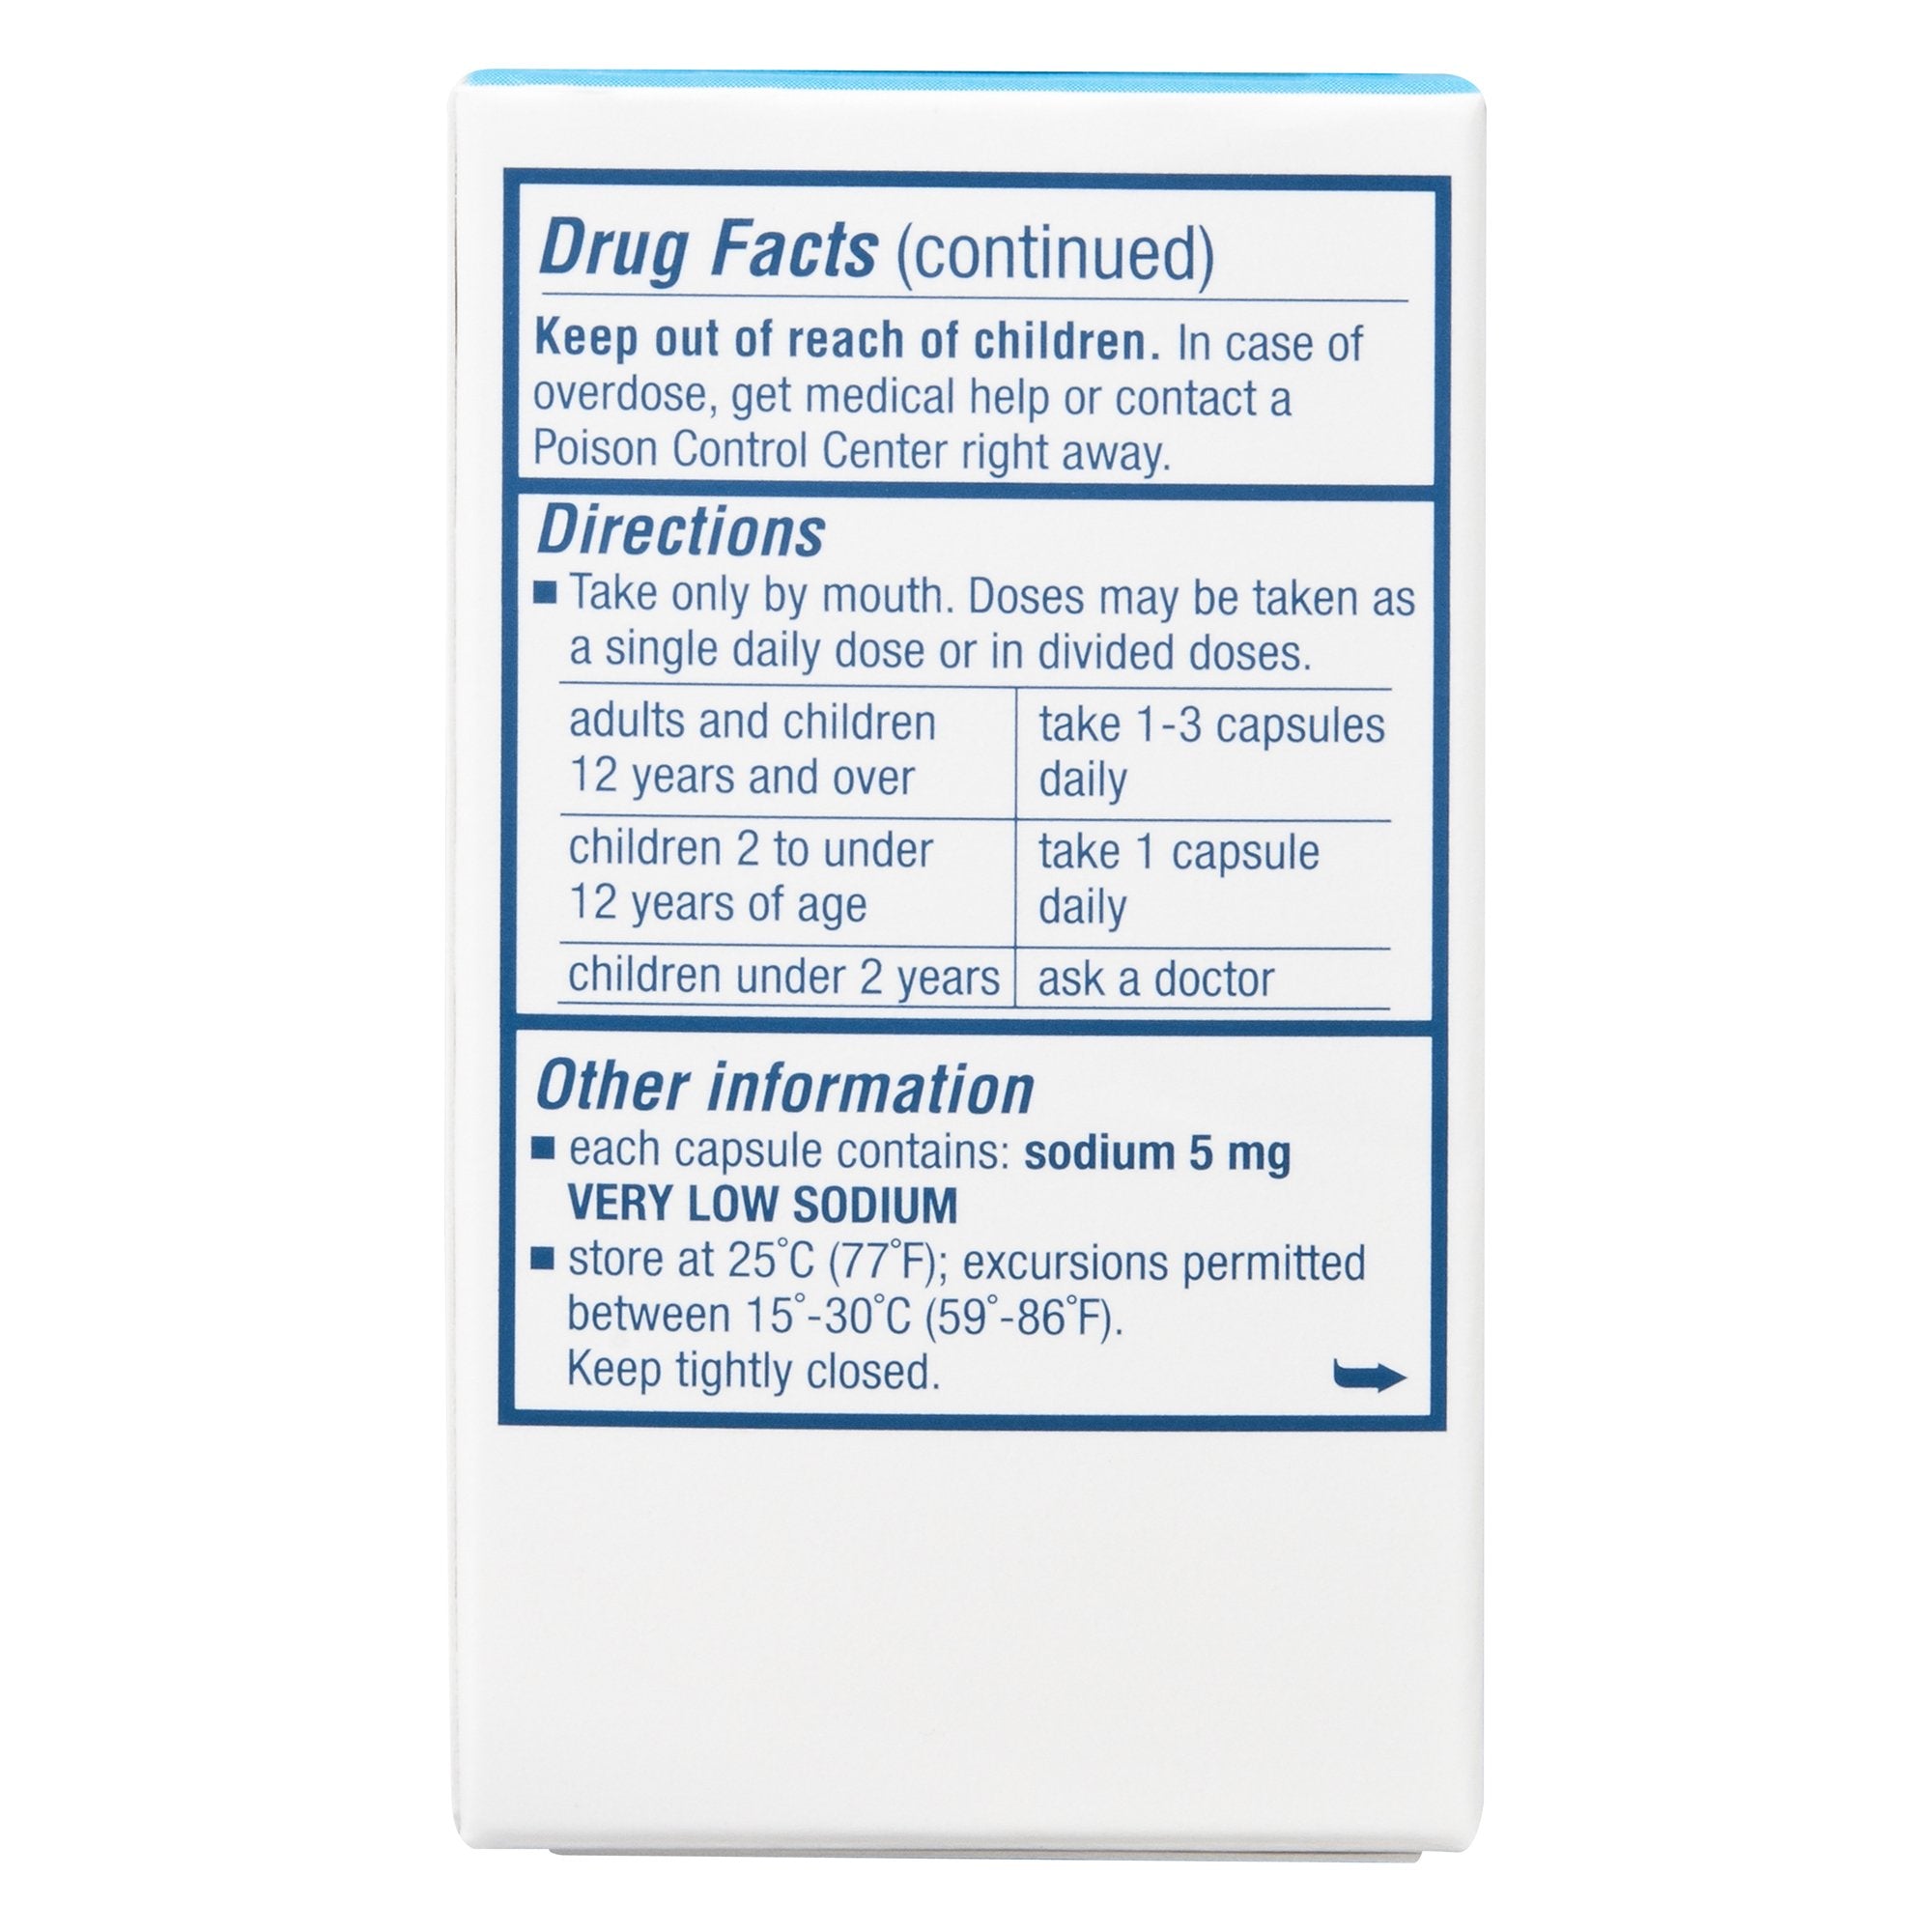 Stool Softener Colace Capsule 30 per Box 100 mg Strength Docusate Sodium